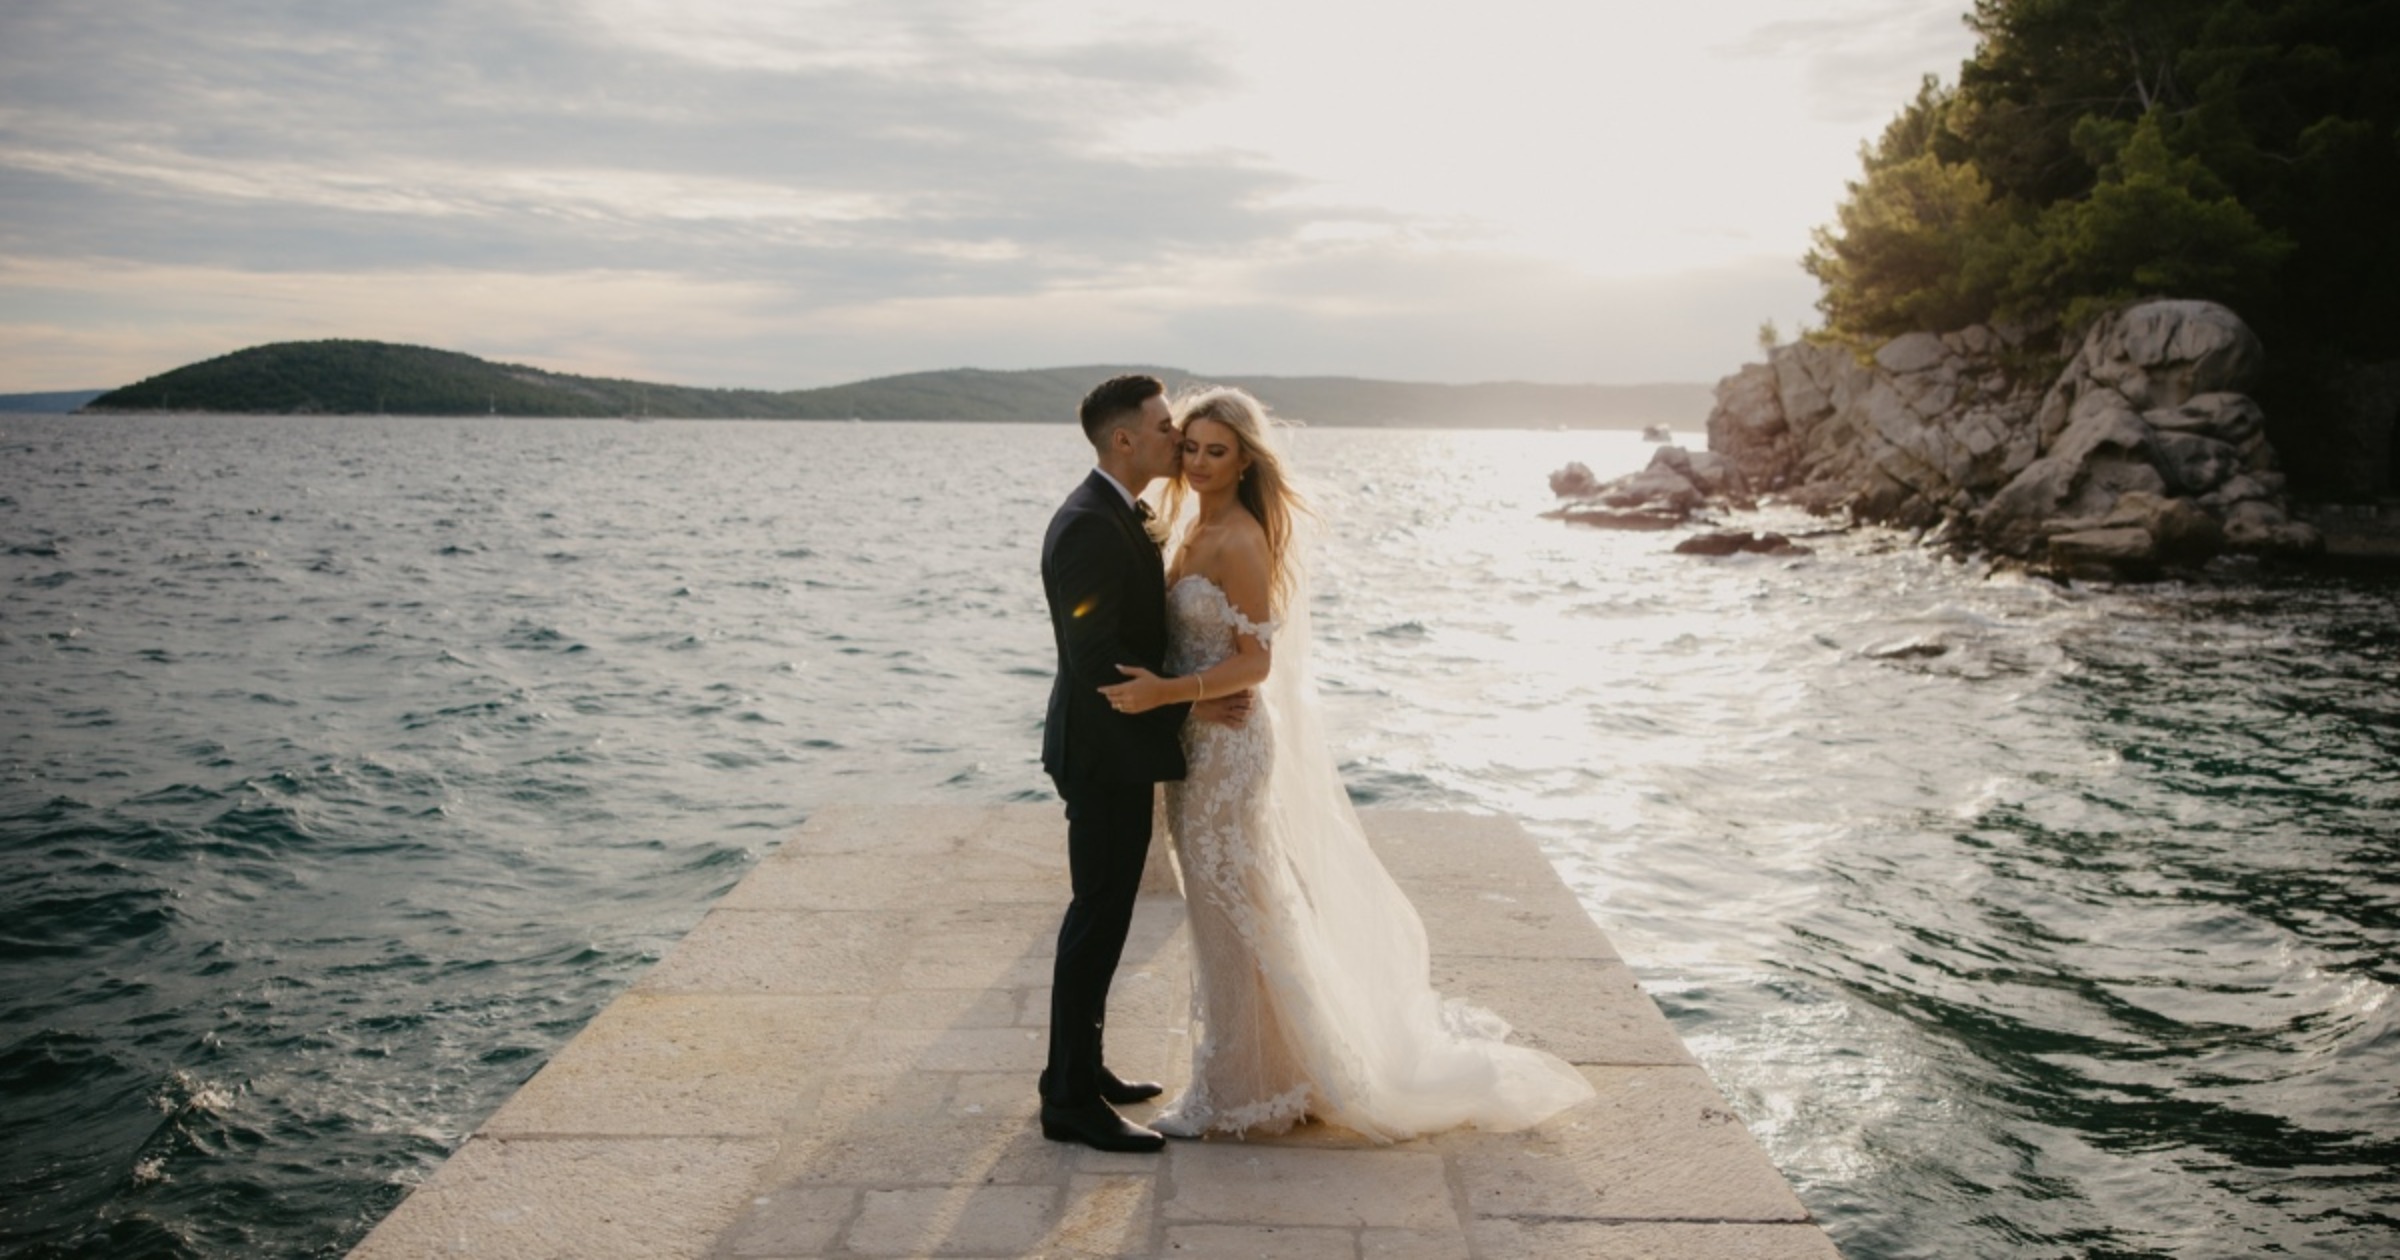 An Elegant Destination Wedding in Croatia at Vila Dalmatia